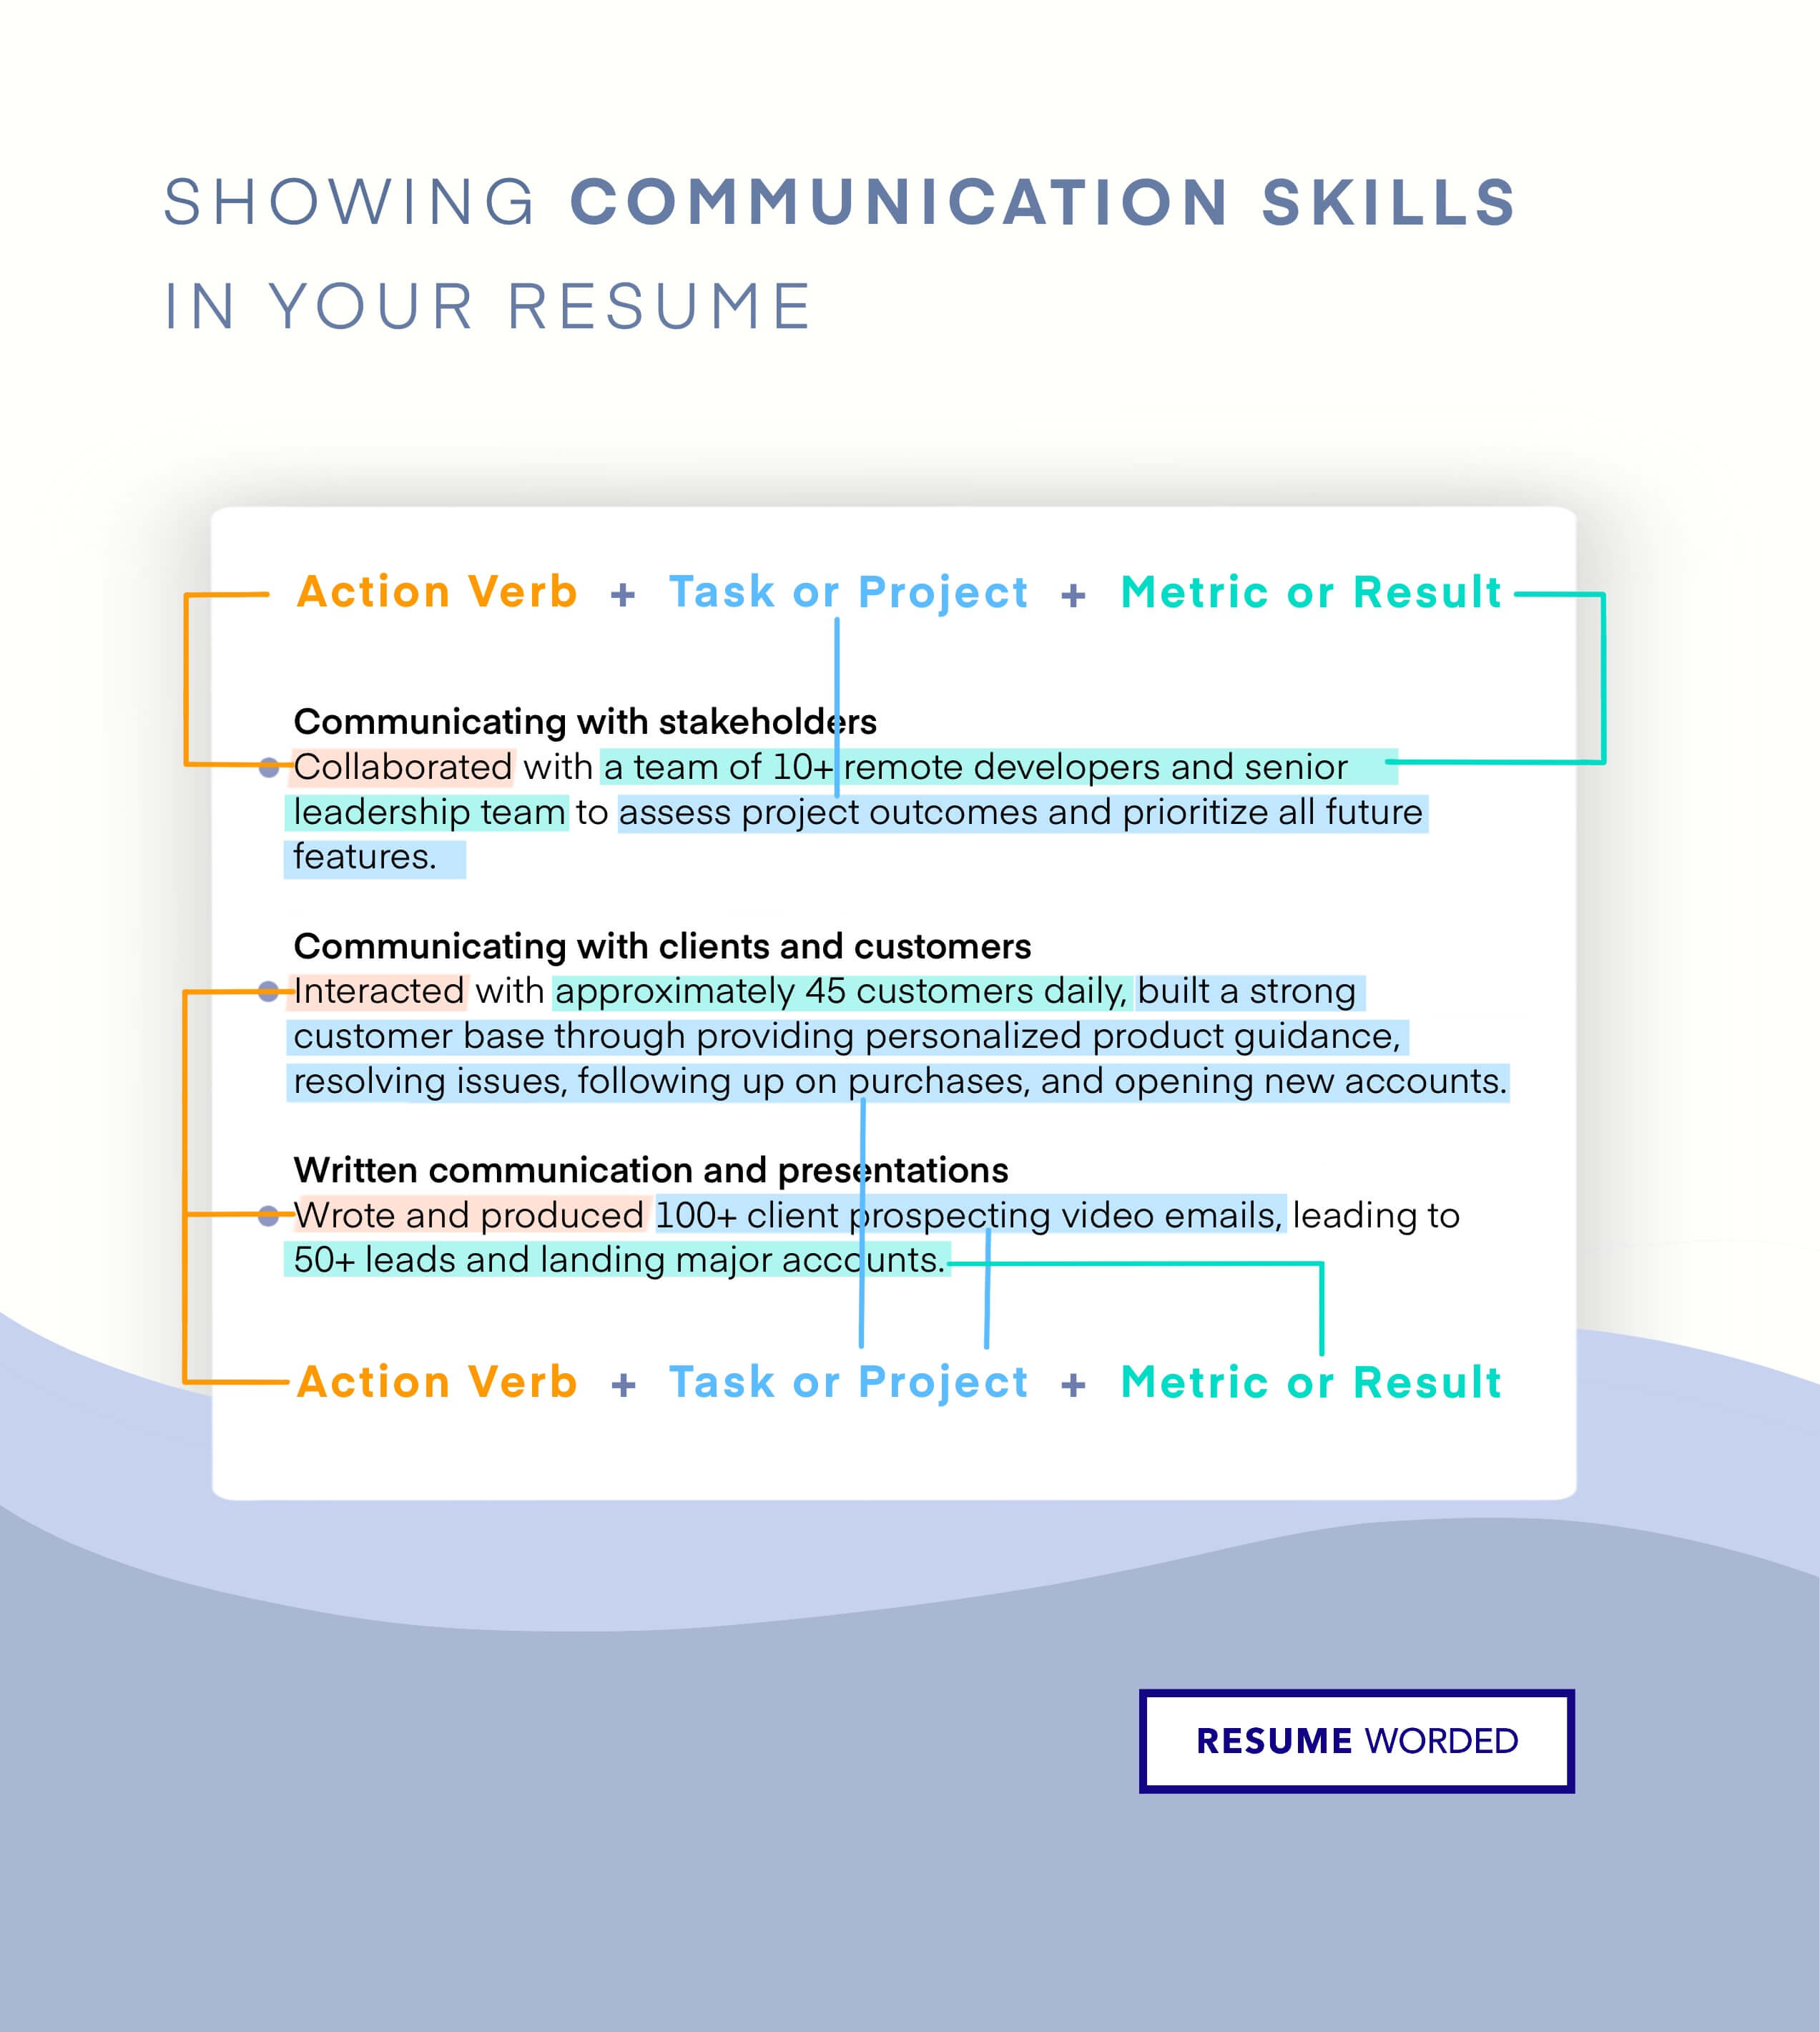 Showcase your communication skills - Entry-Level Recruiter CV